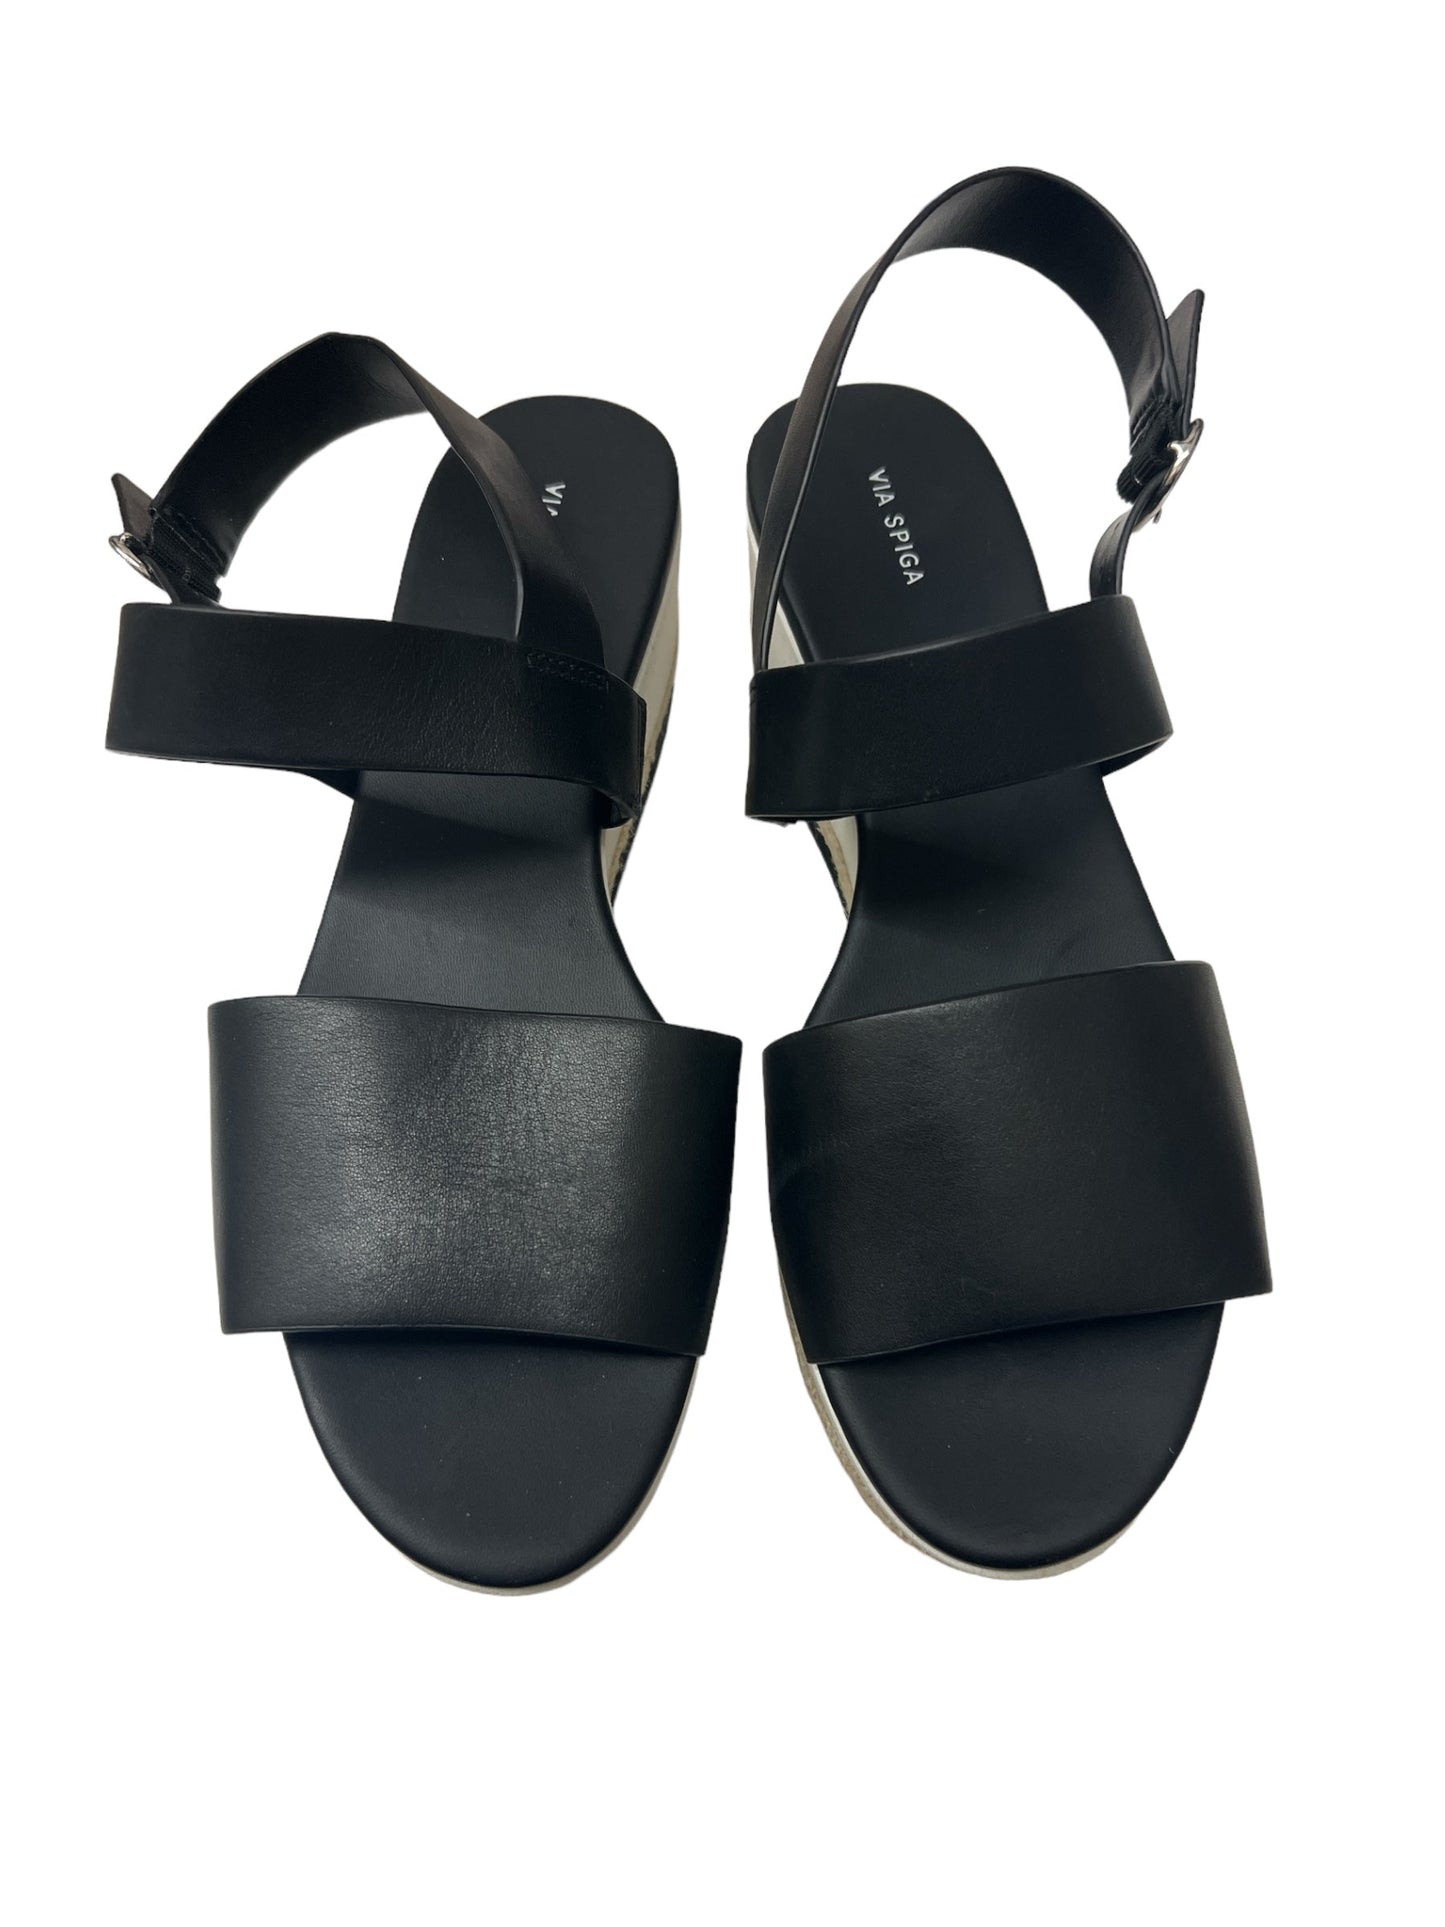 Sandals Heels Platform By Via Spiga  Size: 9.5